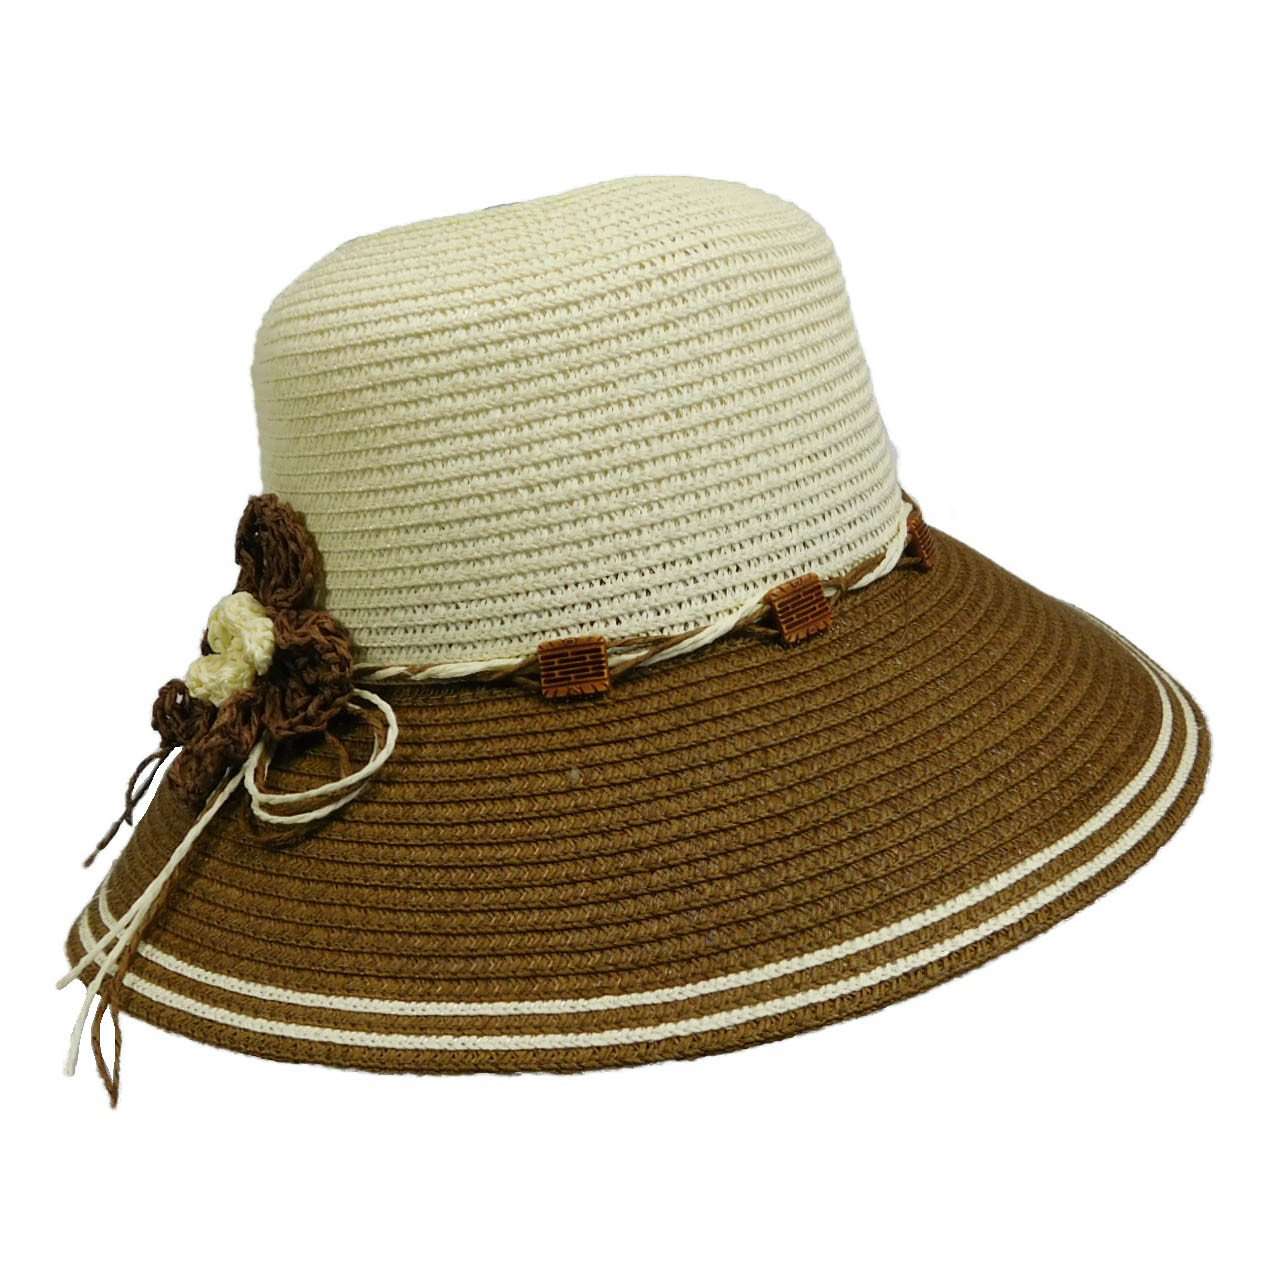 Two Tone Summer Hat with Crochet Flower, Wide Brim Hat - SetarTrading Hats 